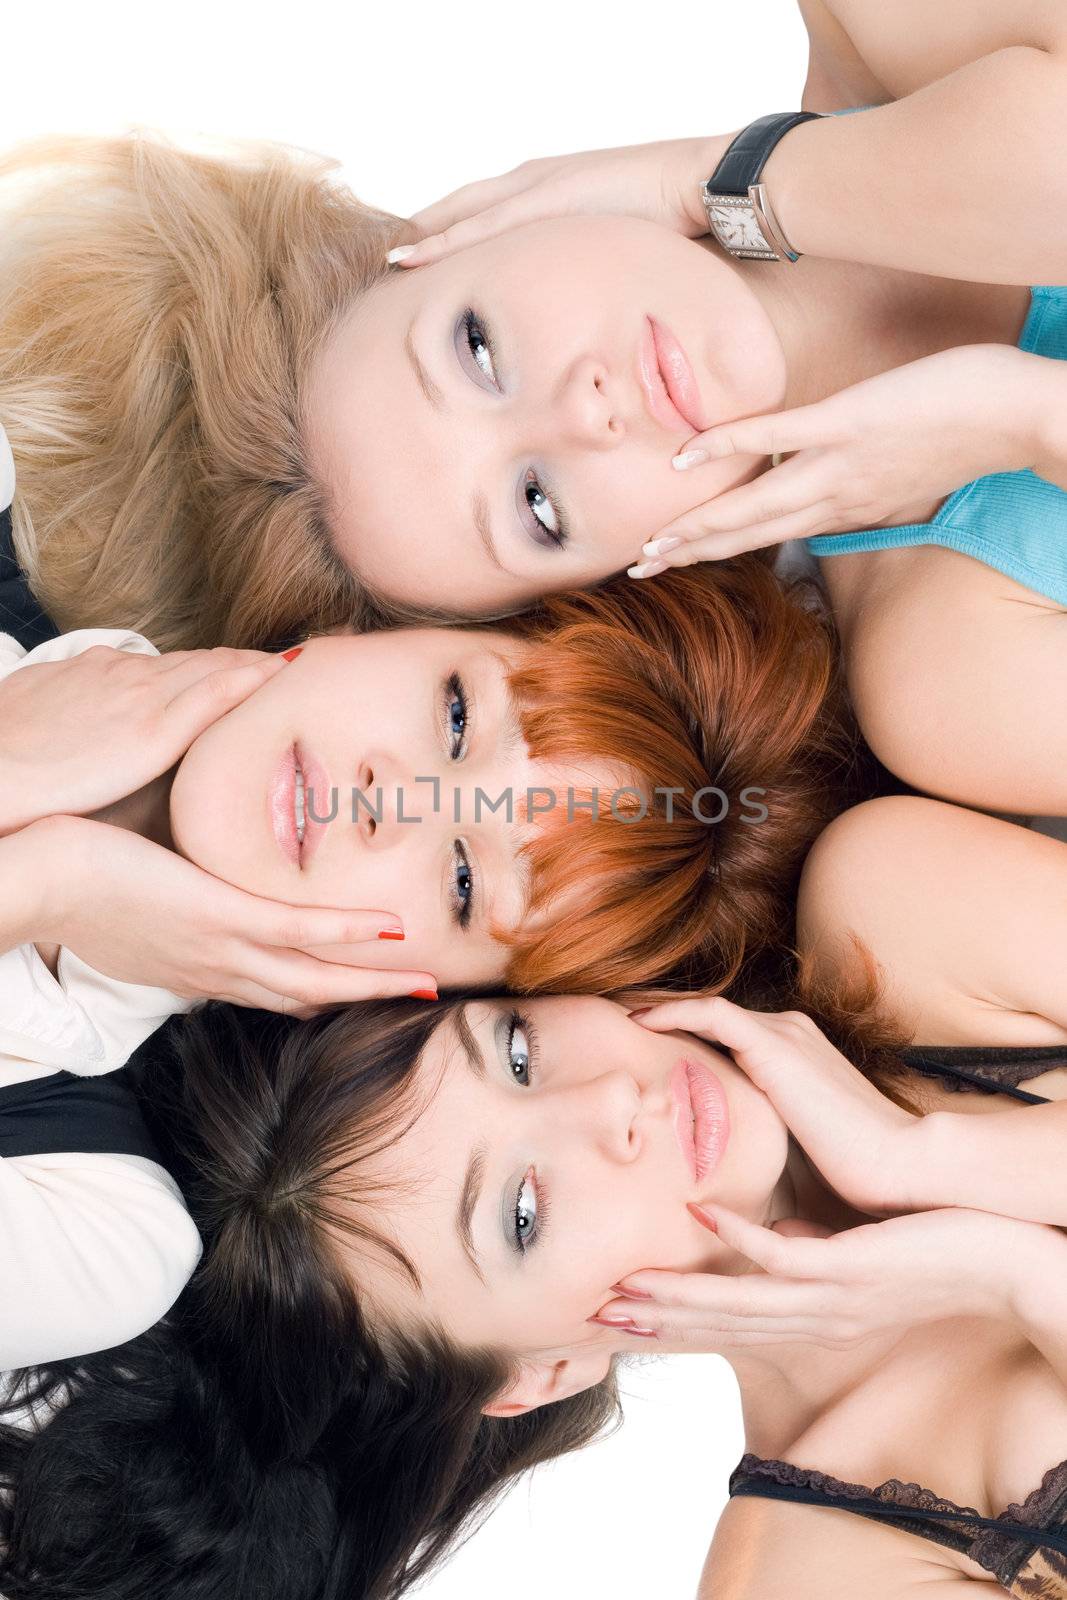 Three women by acidgrey